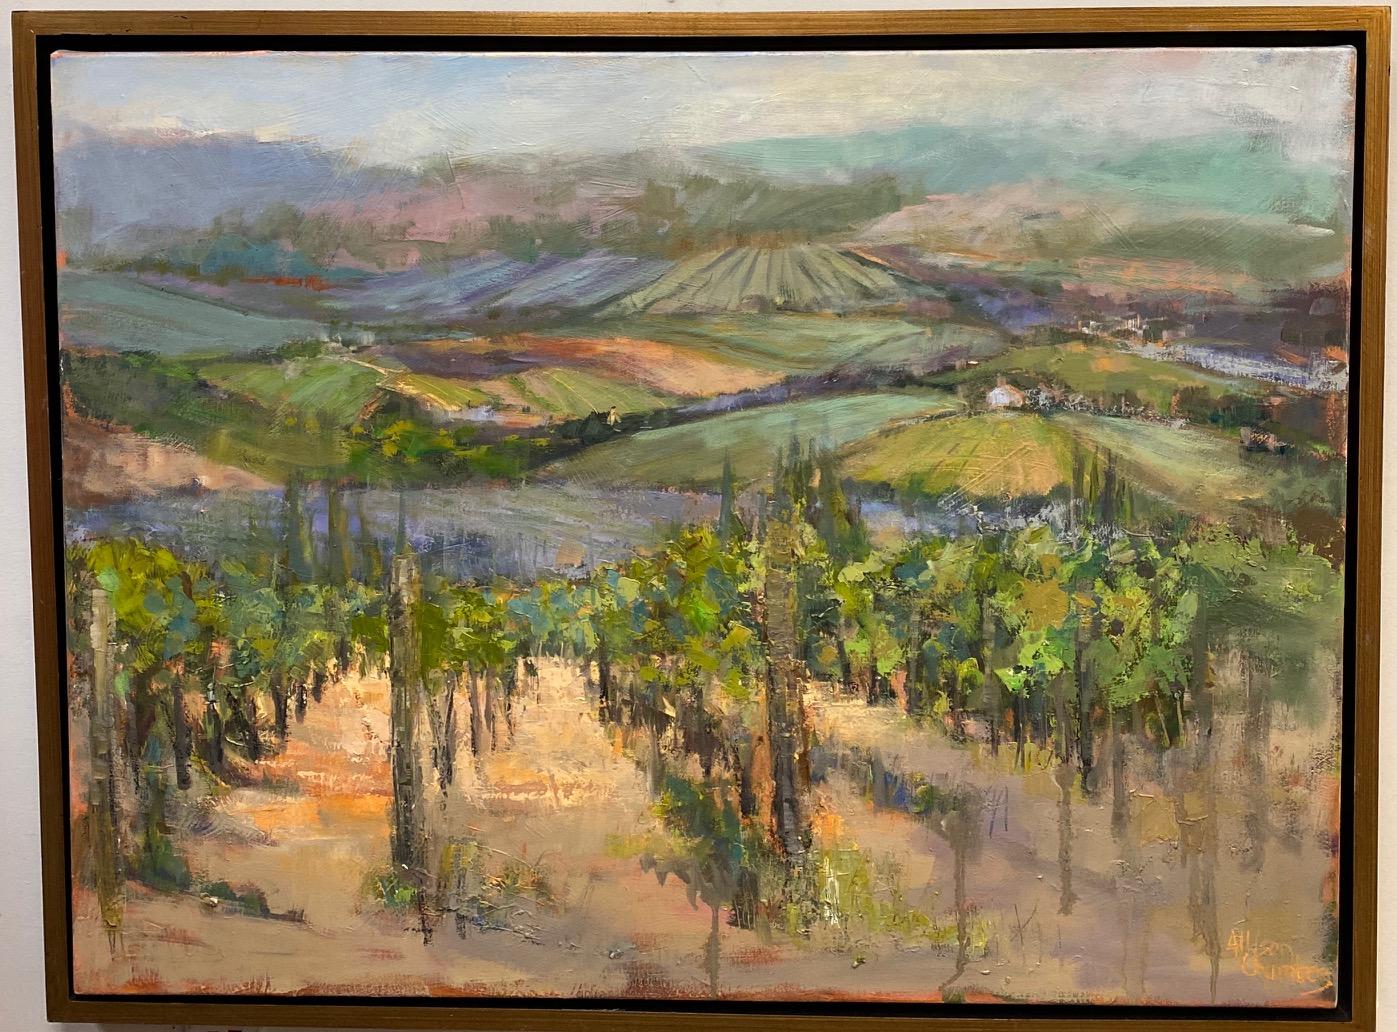 Allison Chambers Landscape Painting - The Hills Are Alive, original 30x40 impressionist Italian landscape